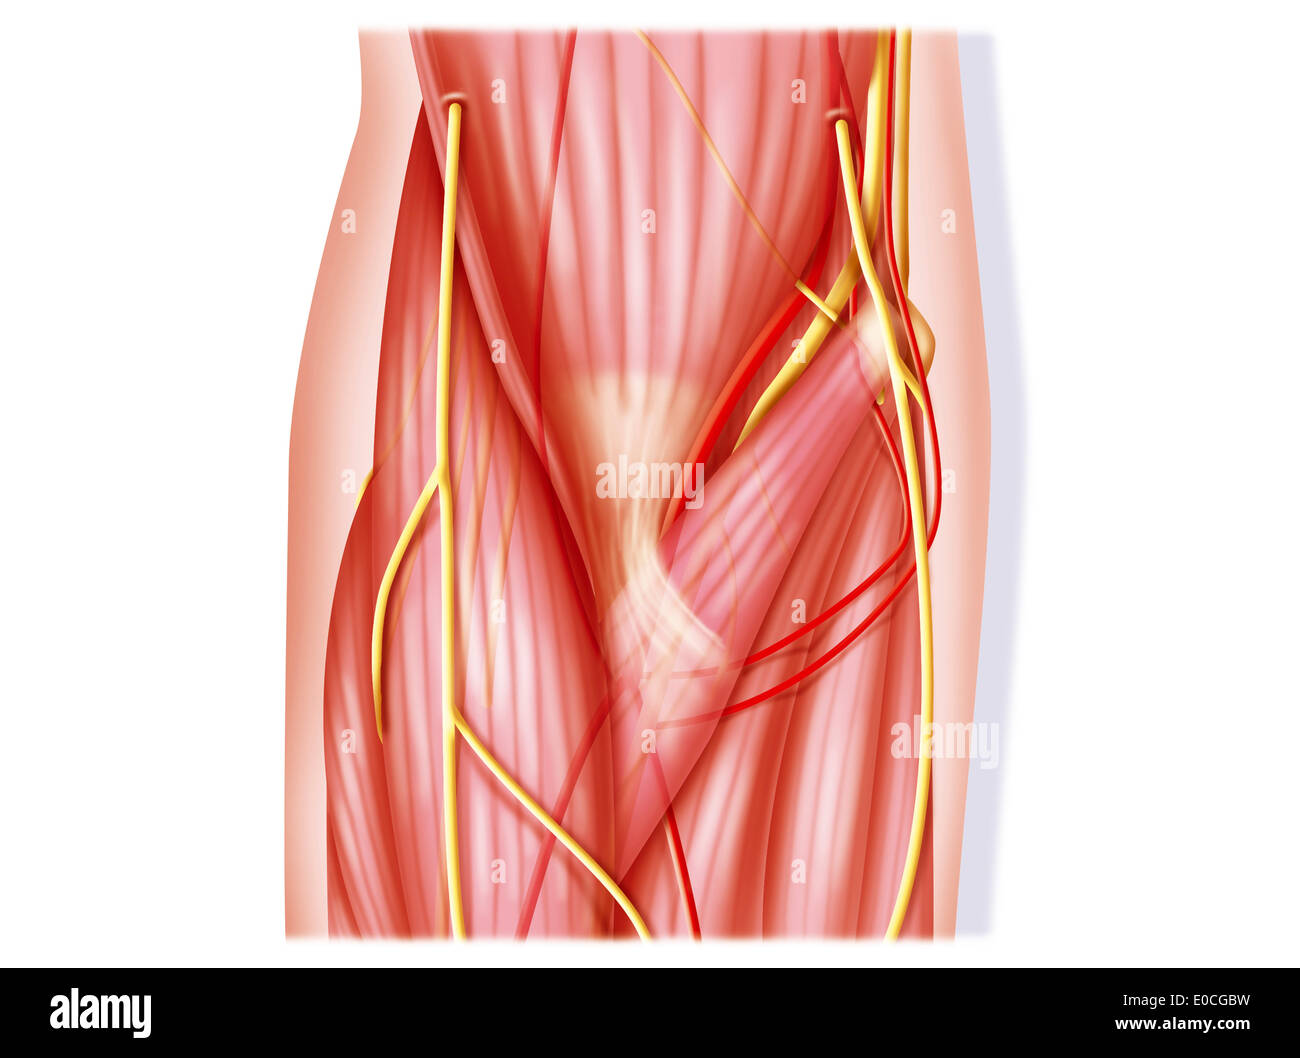 Elbow, anatomy Stock Photo